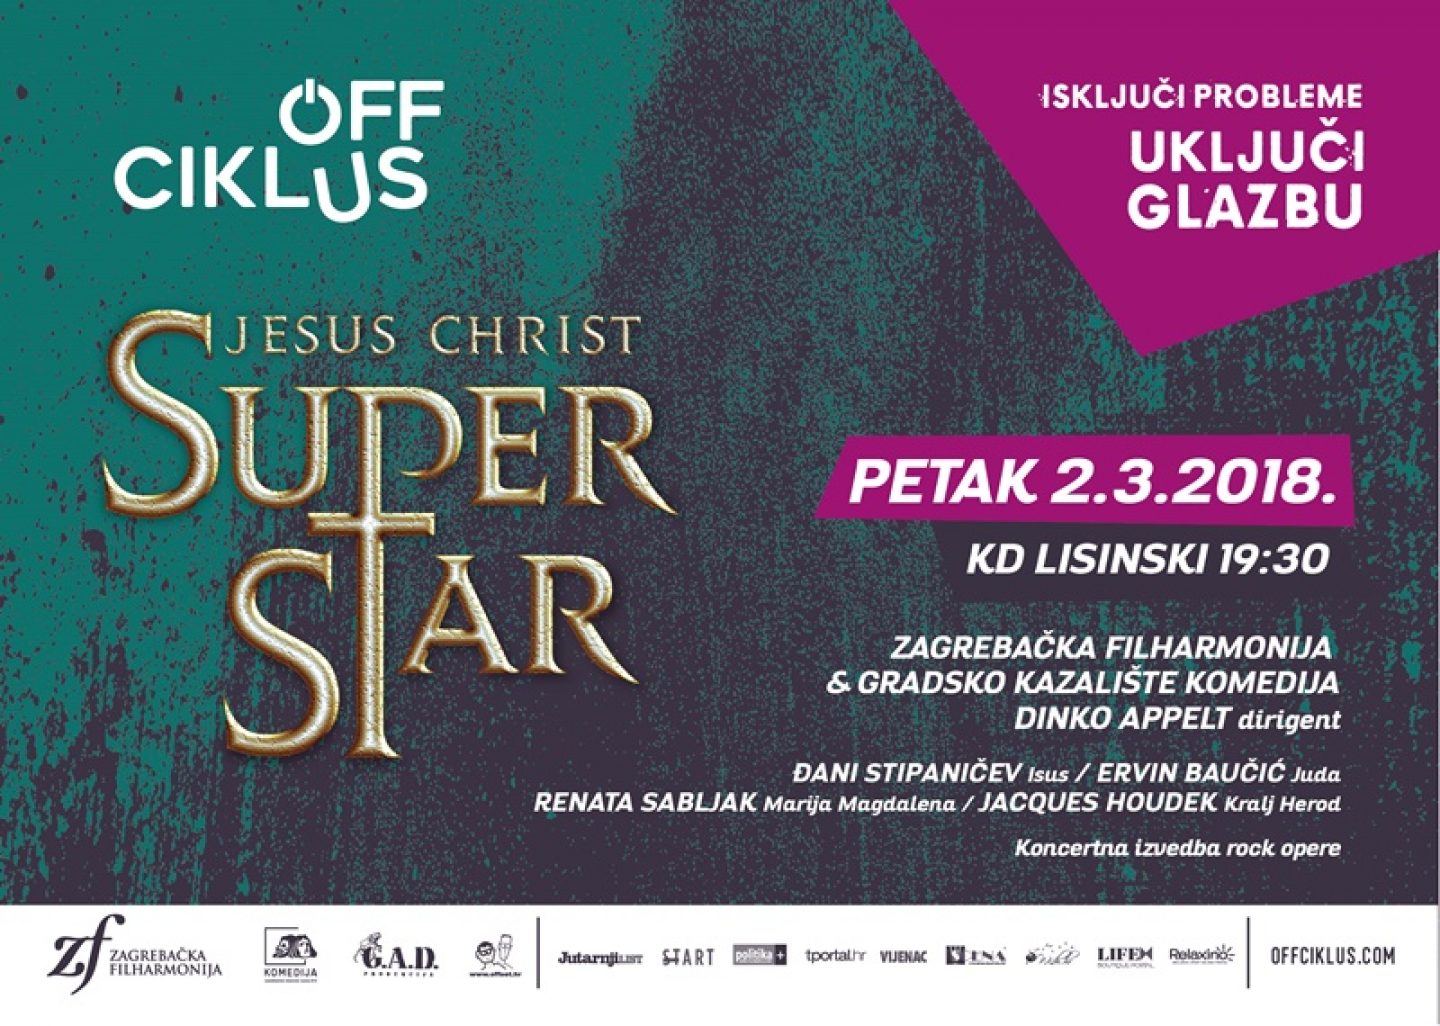 Jesus Christ Superstar rasprodan u Off ciklusu!